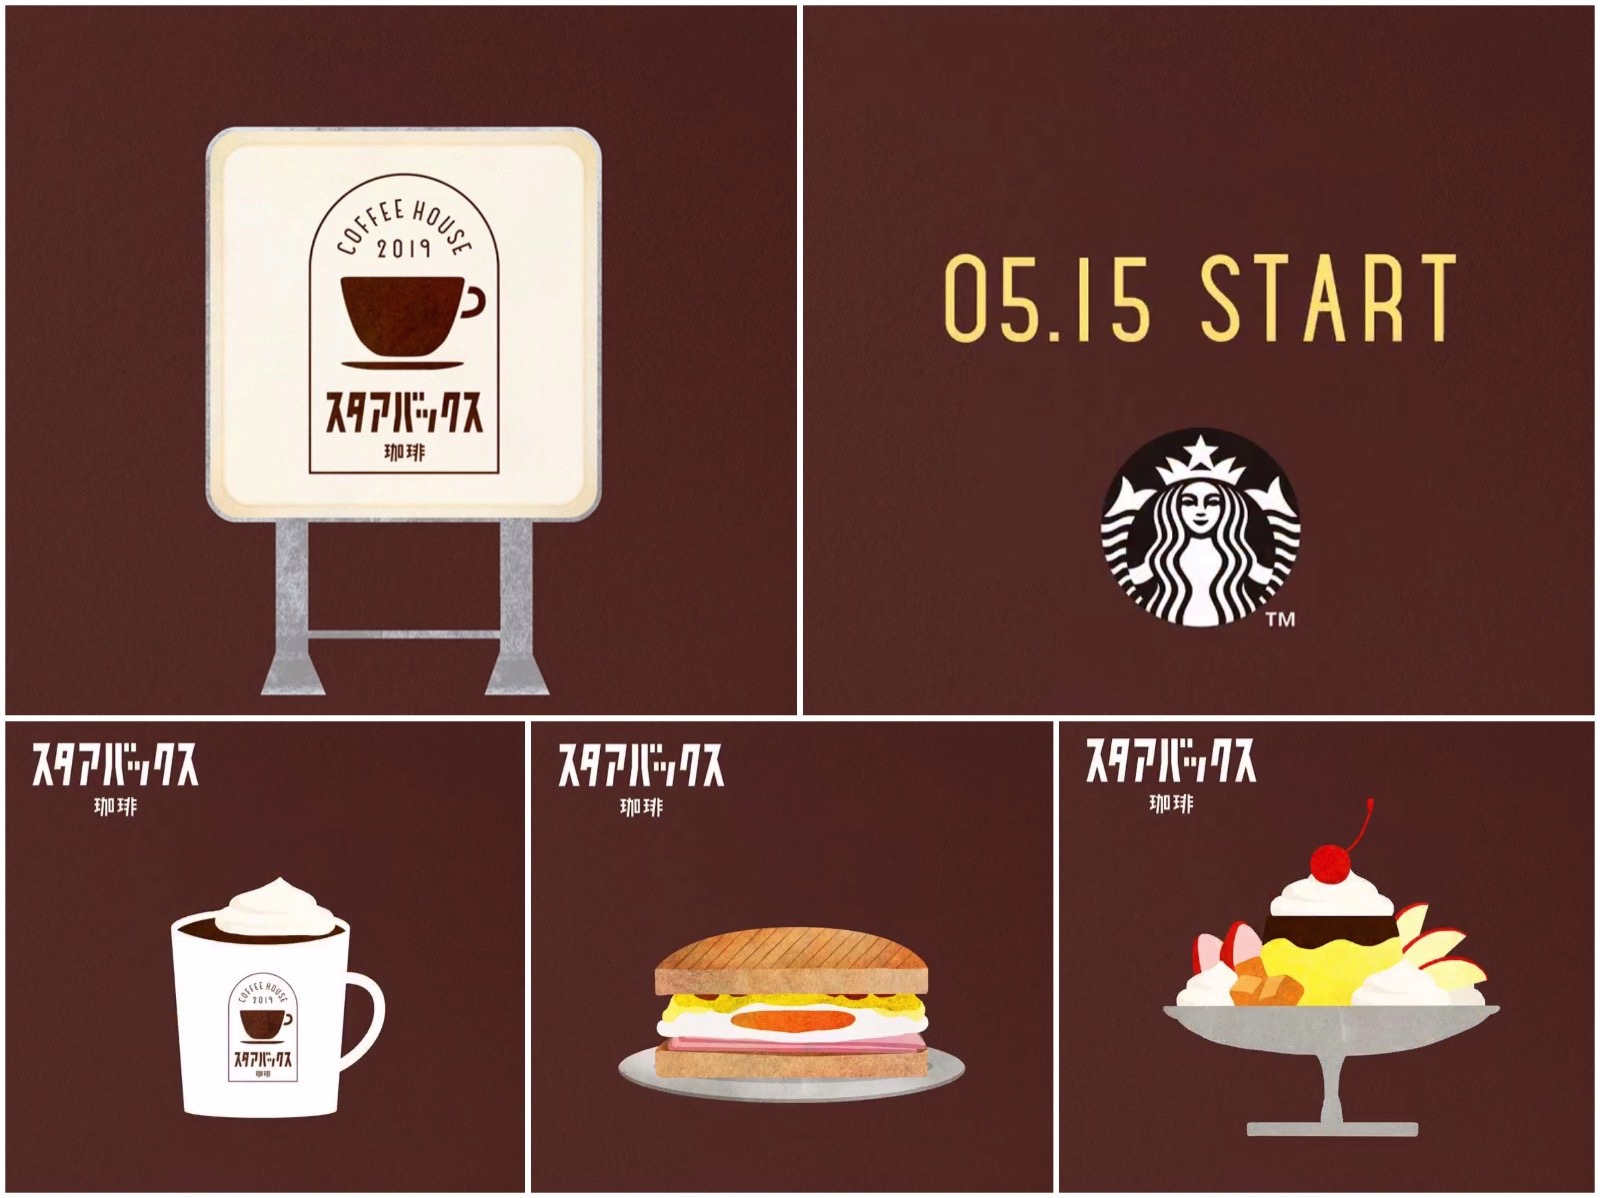 Starbucks-coffee-new-image.jpg